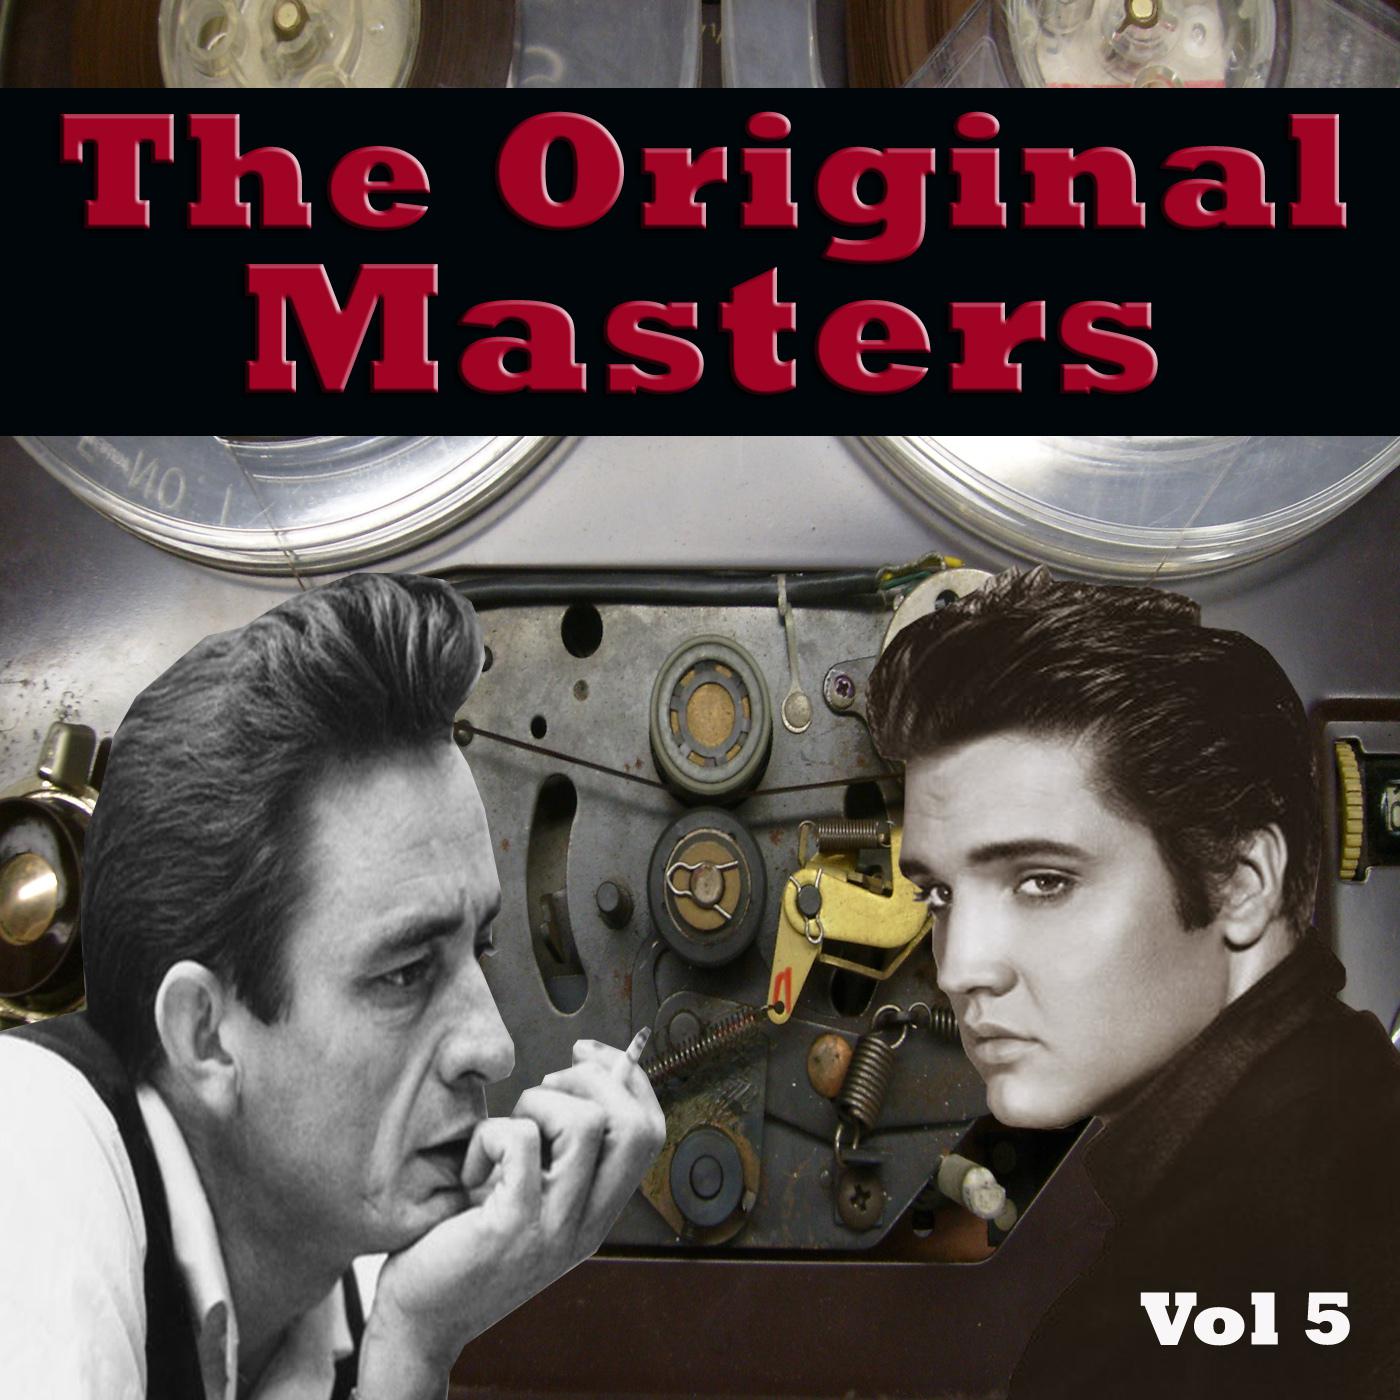 The Original Masters Vol 5